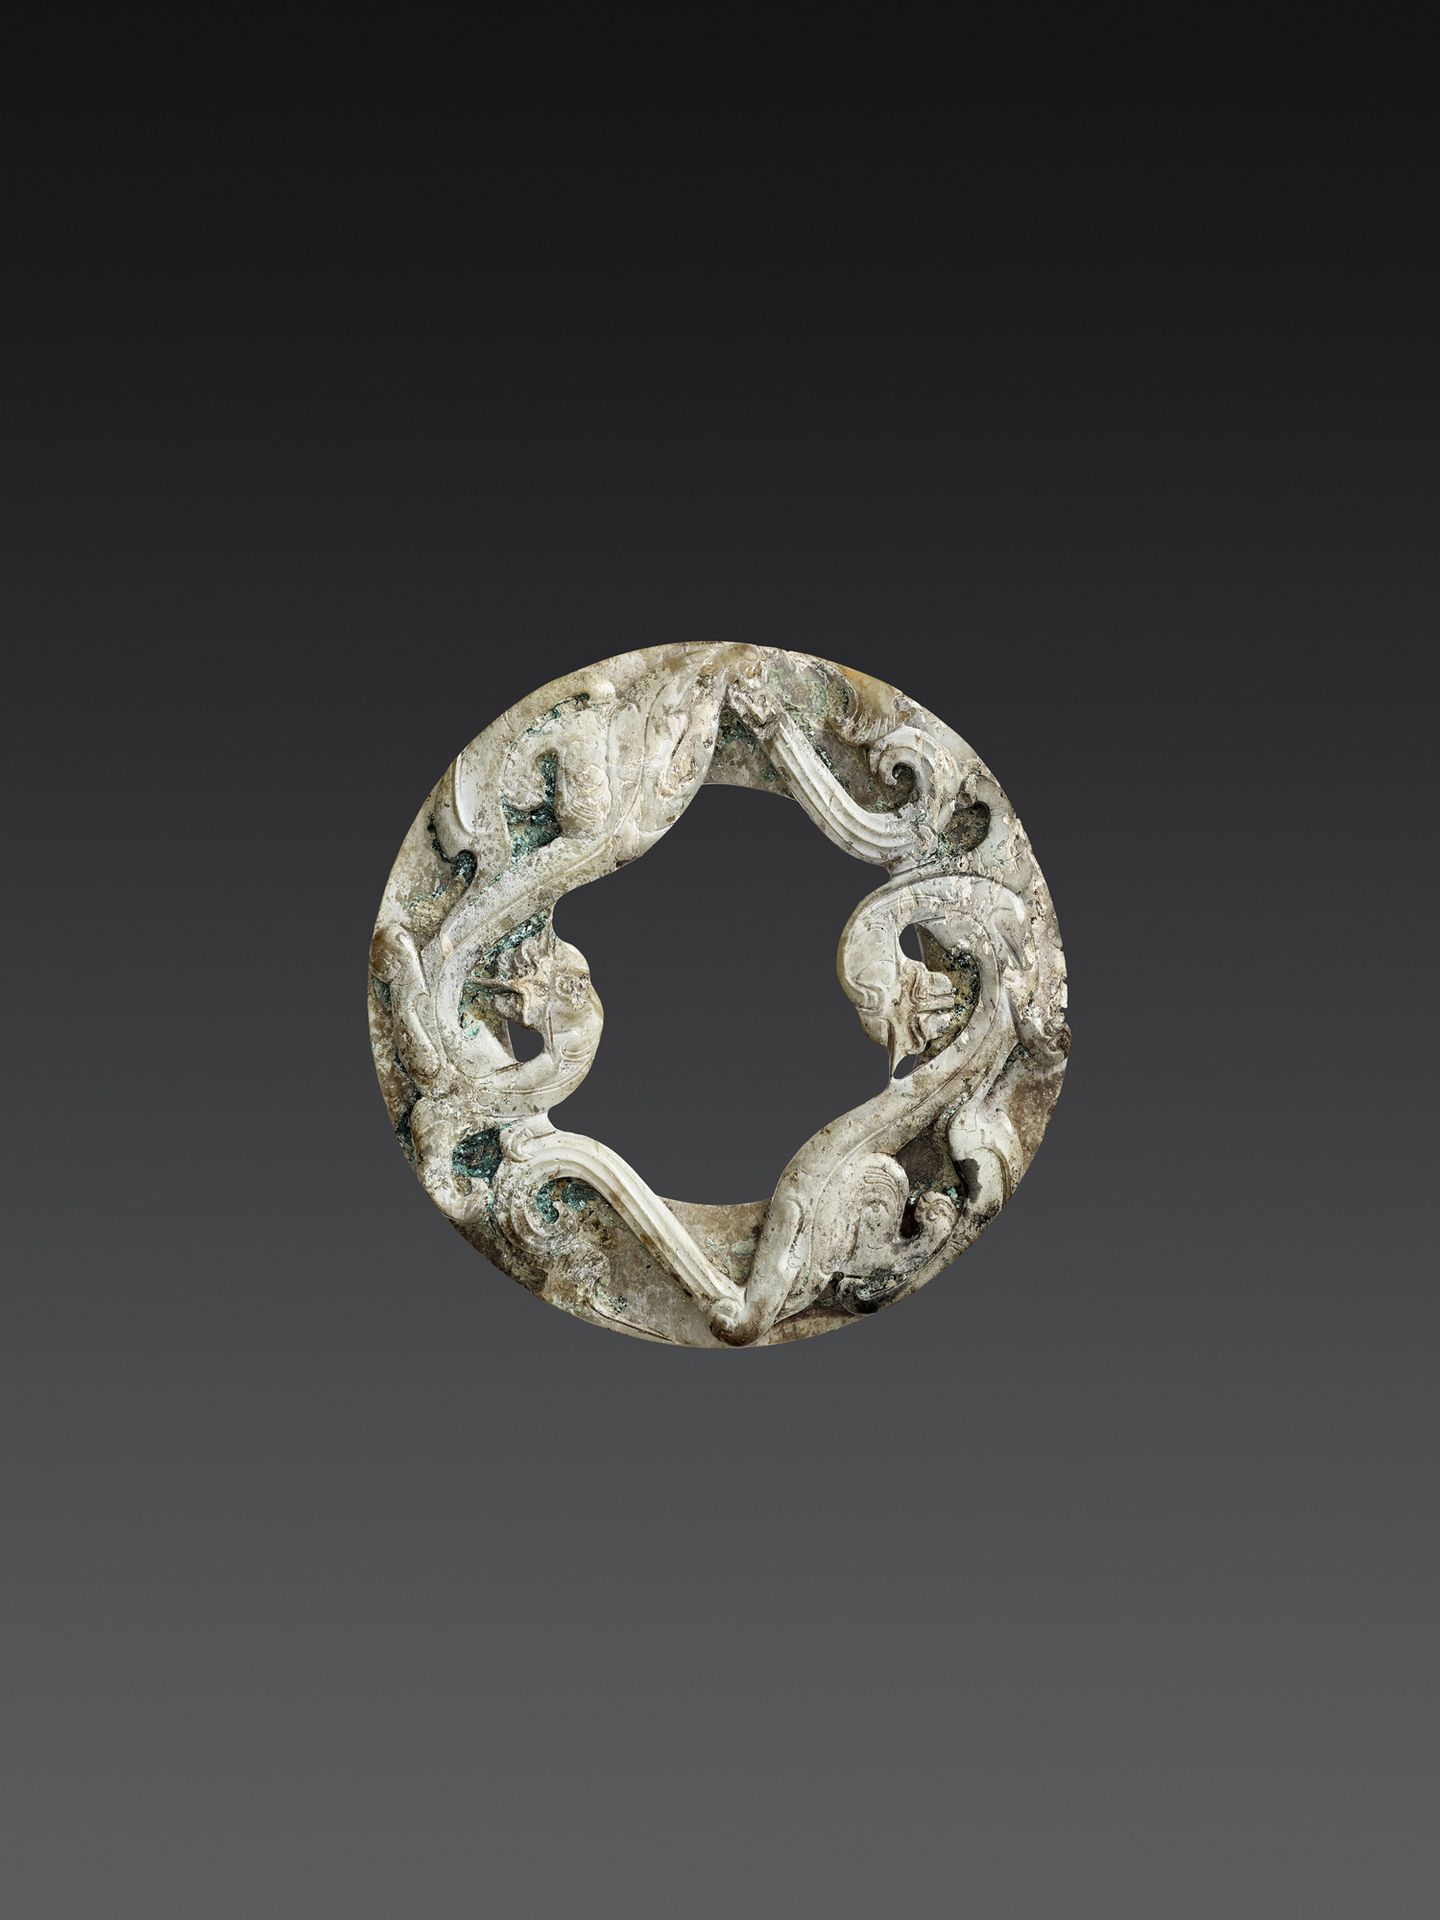 A HAN JADE RING ORNAMENT WITH COILED CHILONG 汉代玉石环饰与卷曲的赤龙
玉石。中国，汉代，公元前1世纪-公元1世纪
&hellip;